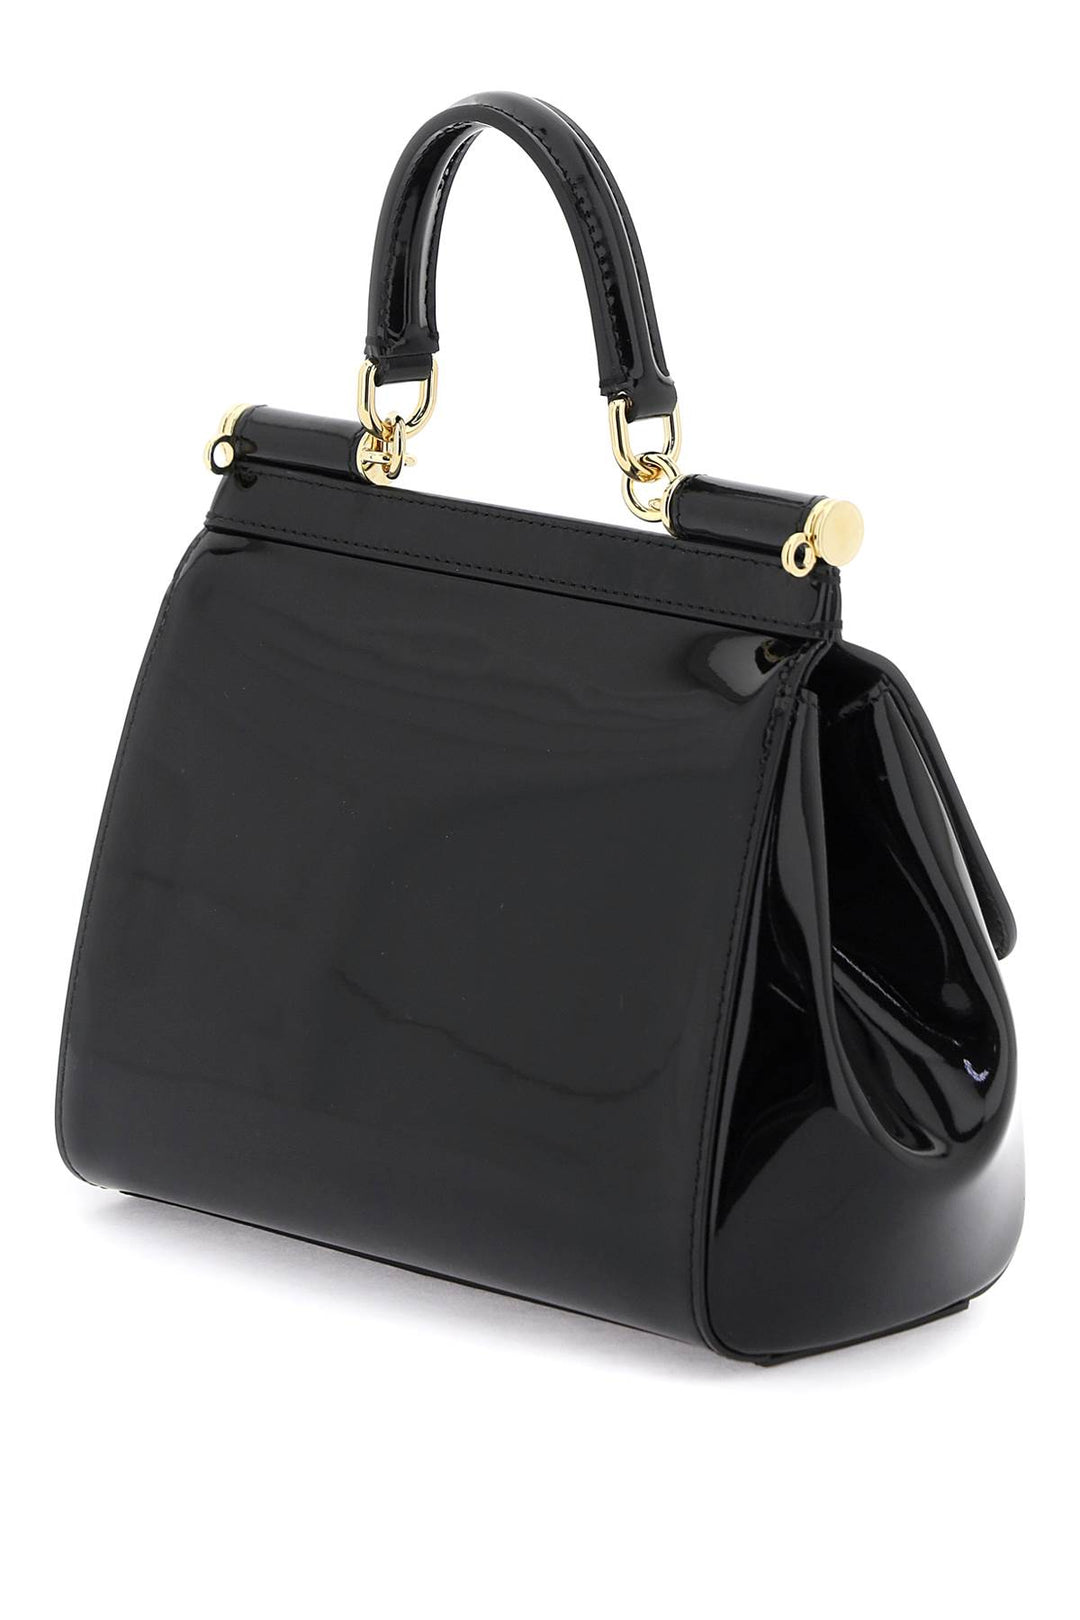 Dolce & Gabbana Patent Leather 'Sicily' Handbag   Black